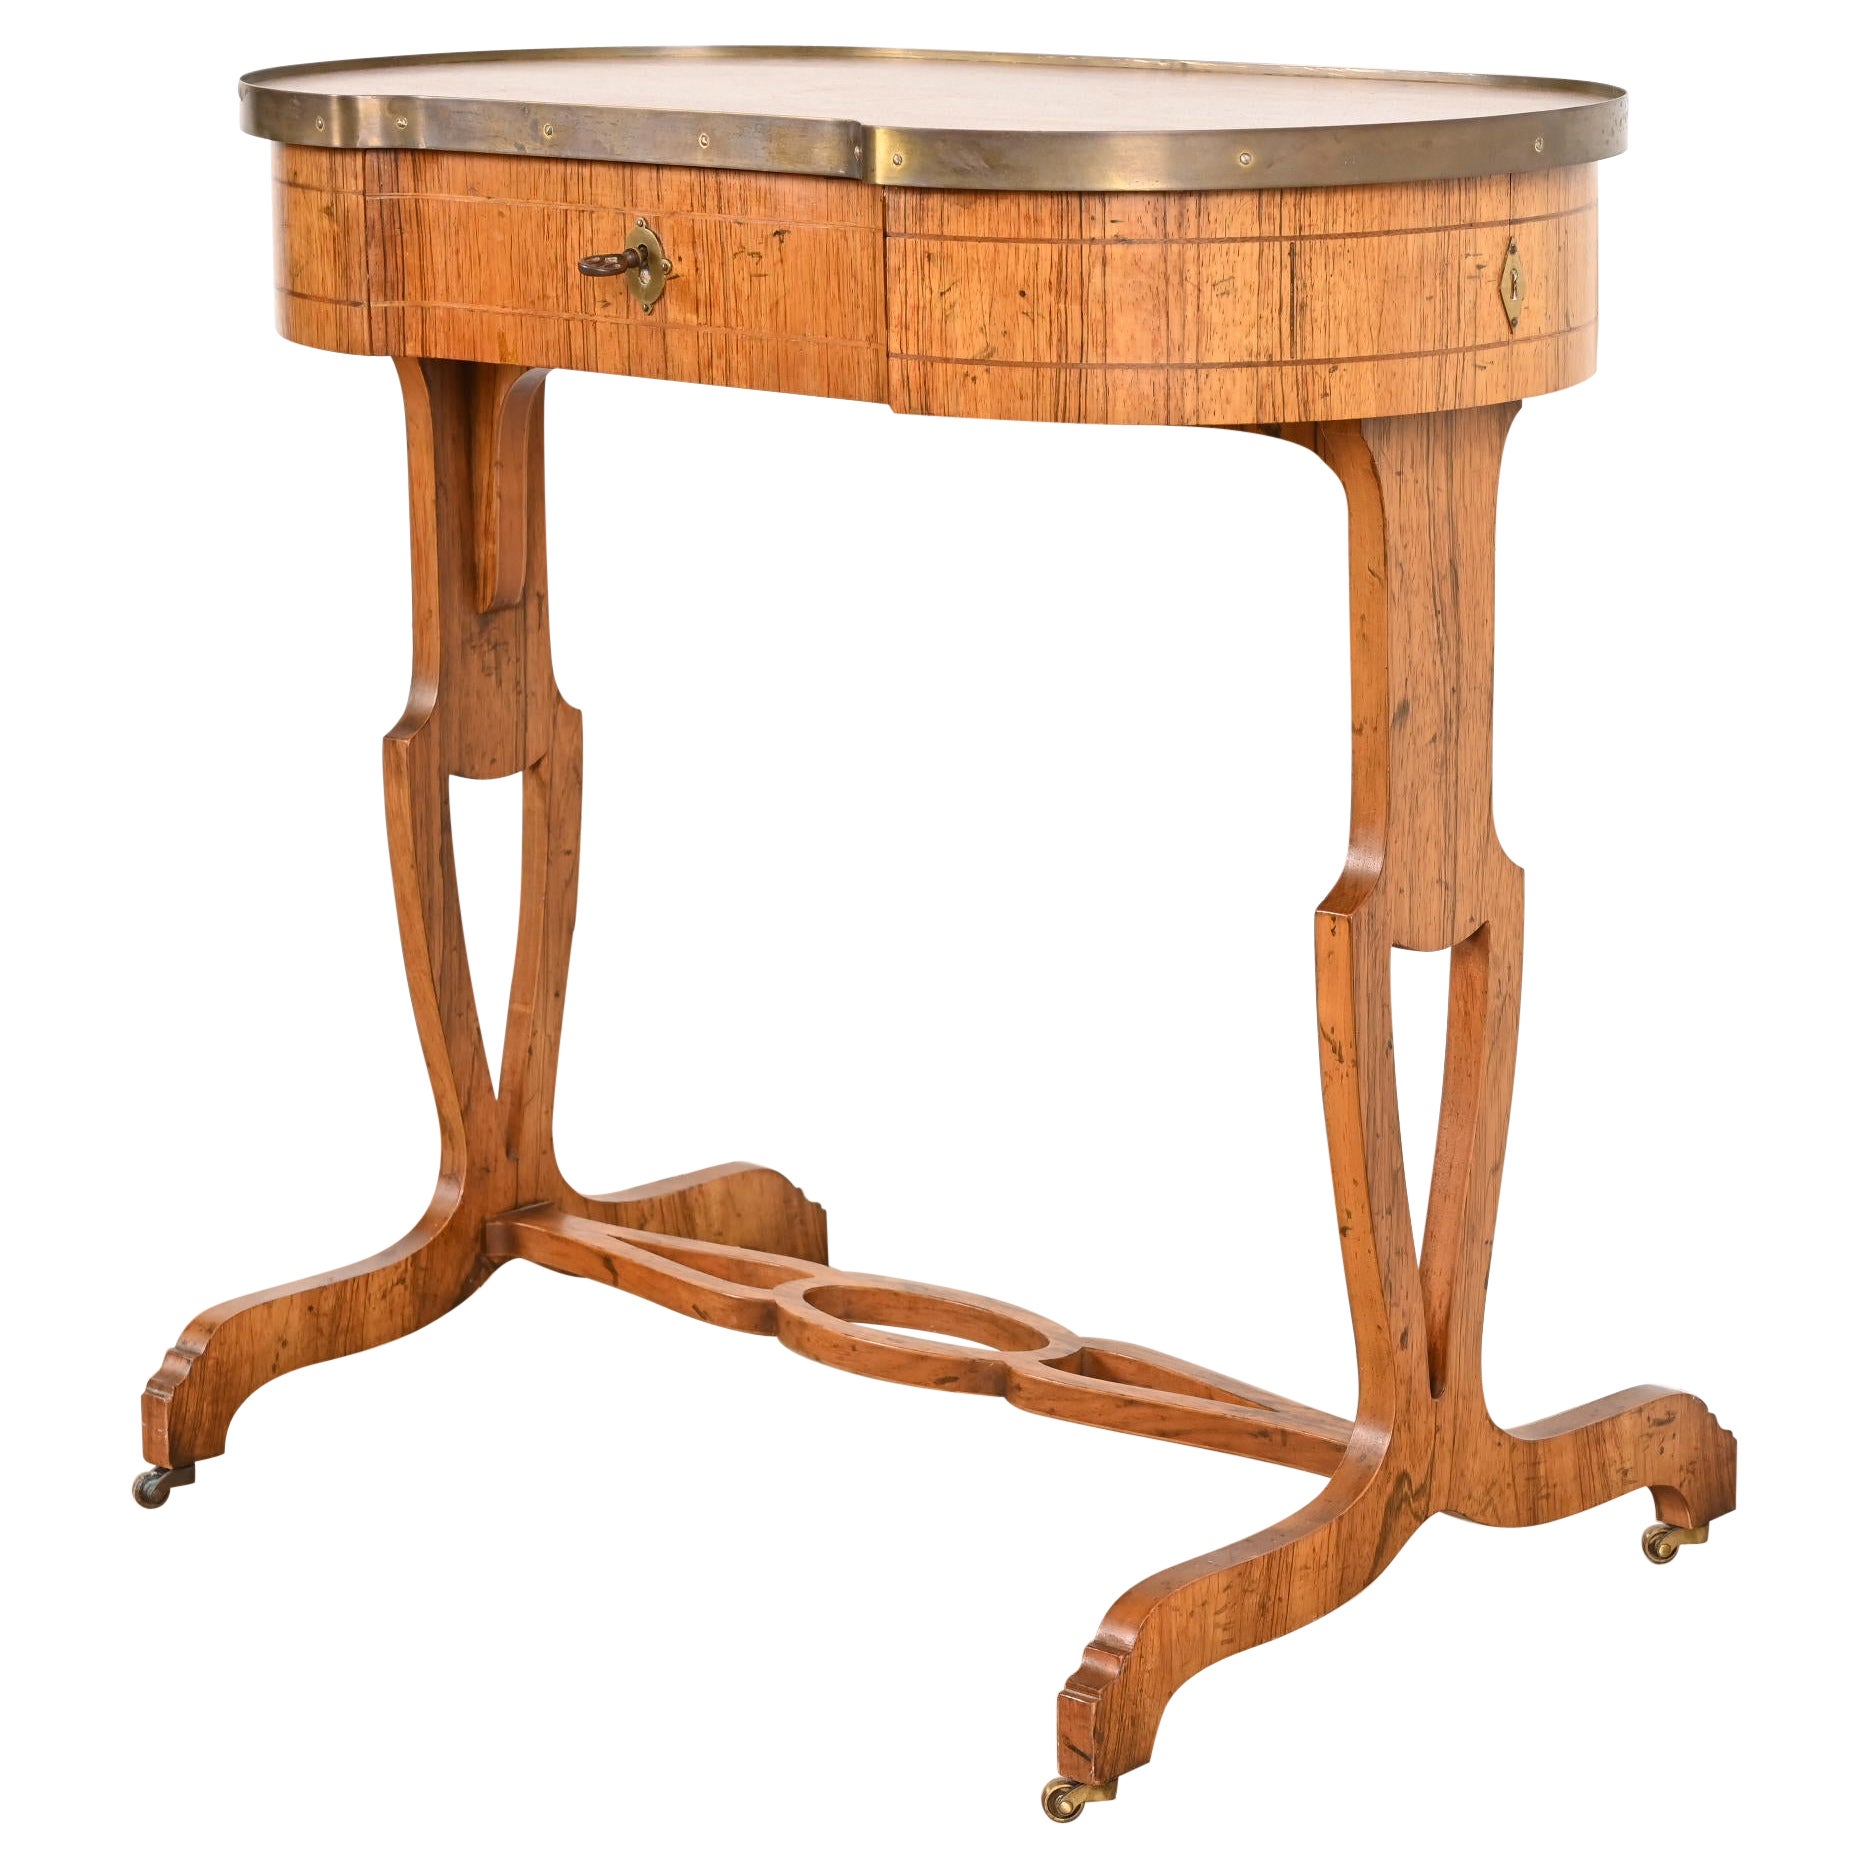 Baker Furniture English Regency Rosewood Console or Petite Writing Desk